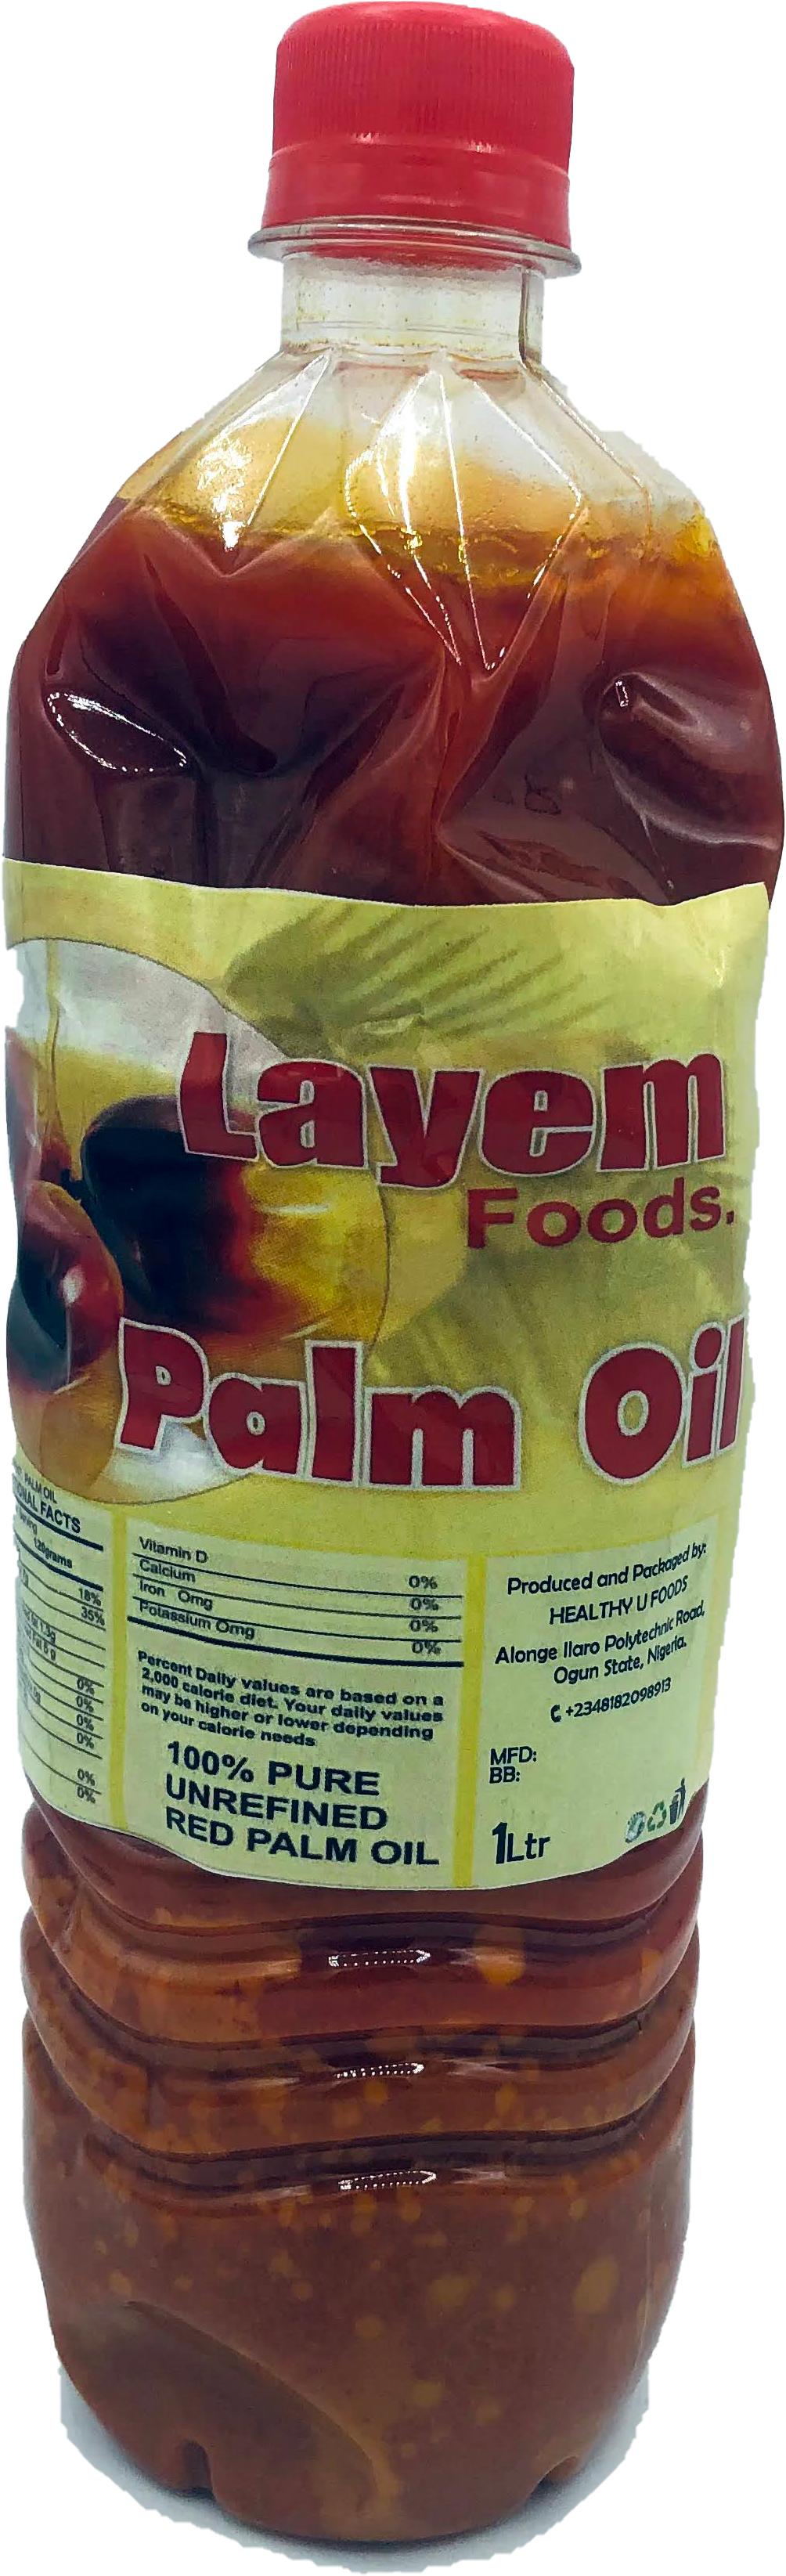 Layem Palm Oil